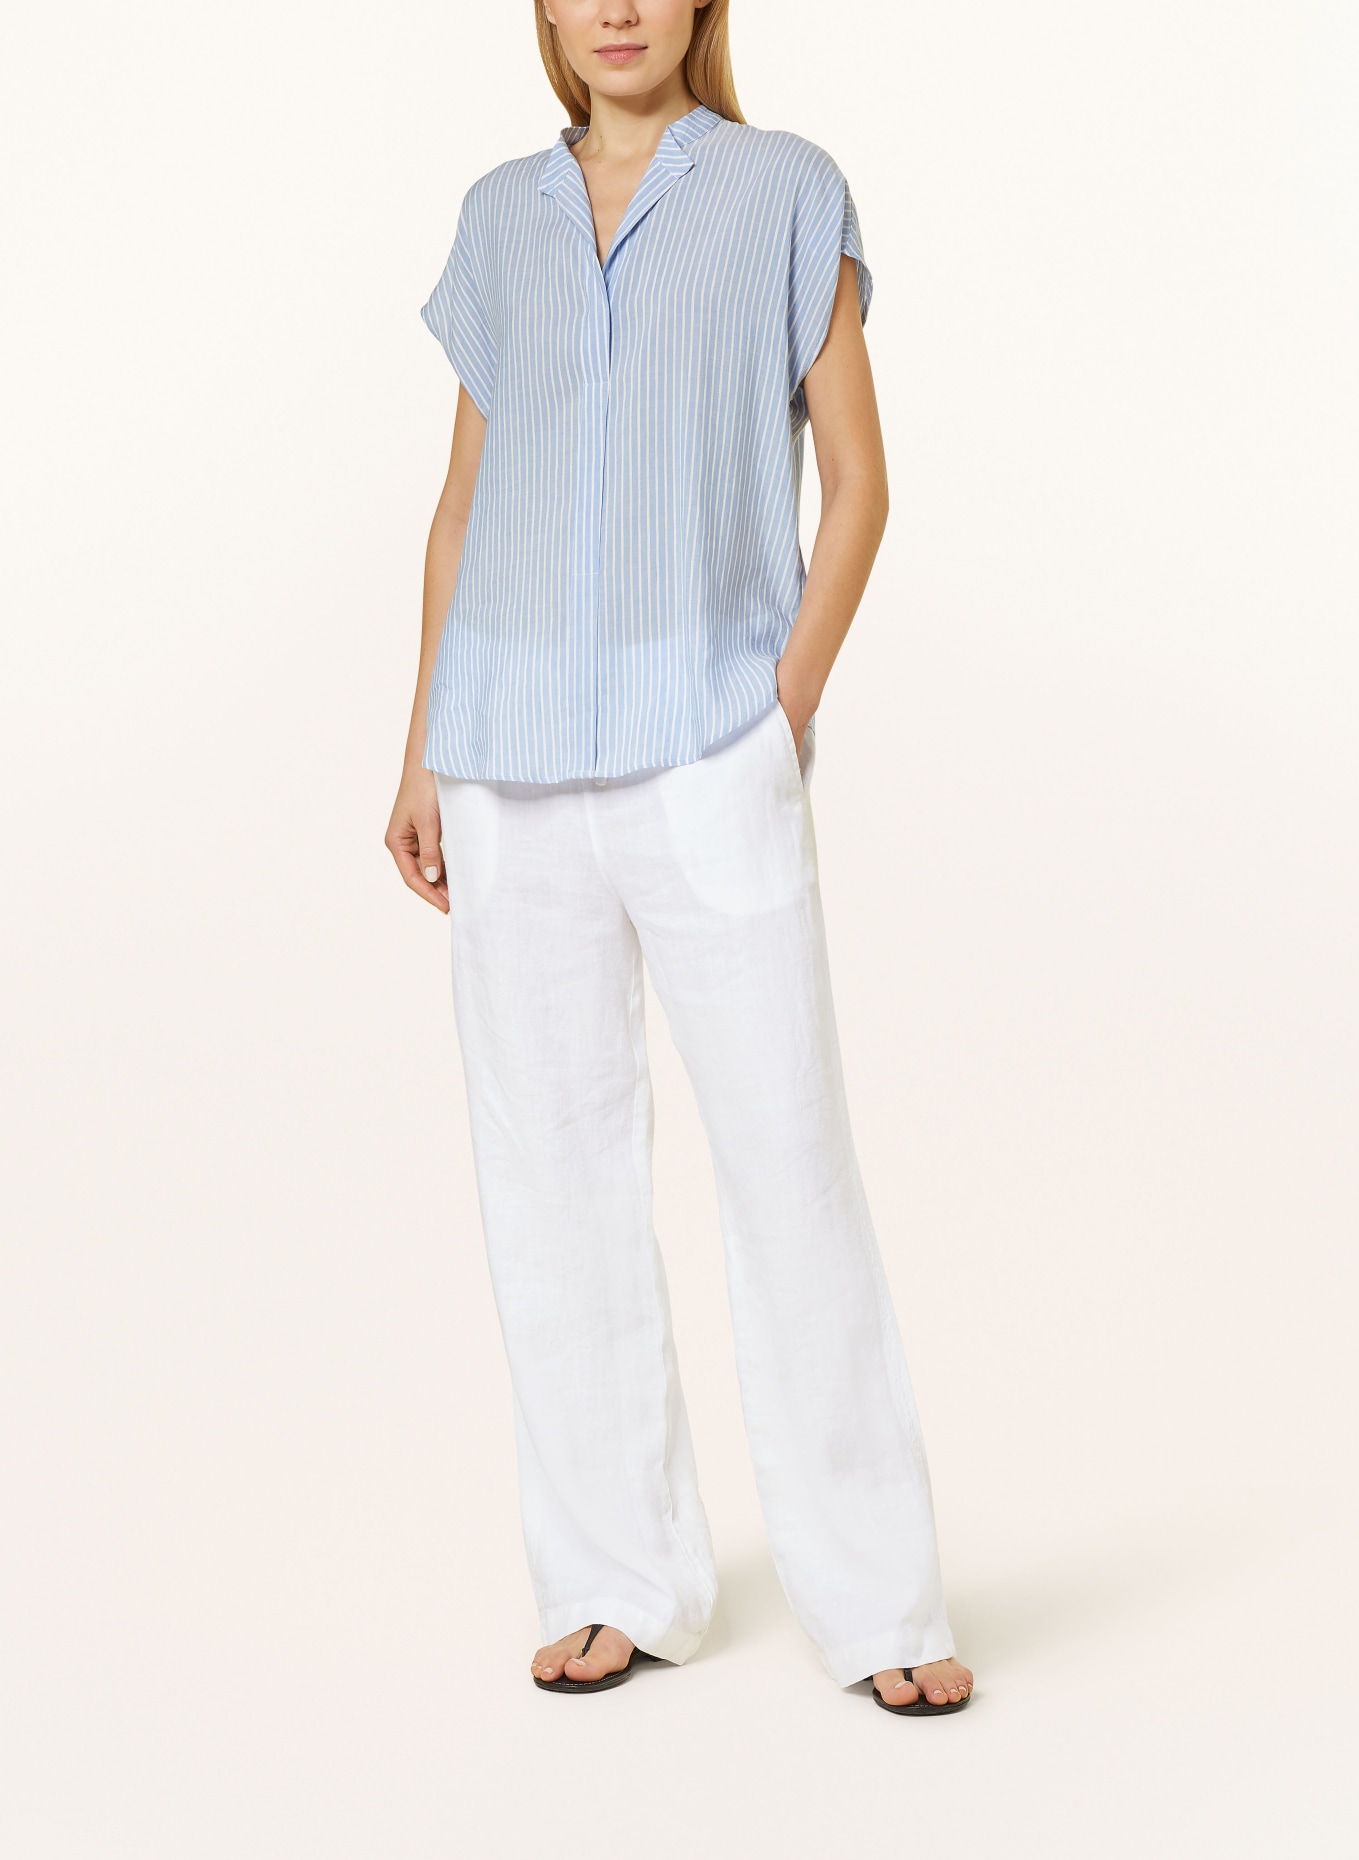 ELENA MIRO Blouse top DANAE with linen, Color: LIGHT BLUE/ WHITE (Image 2)